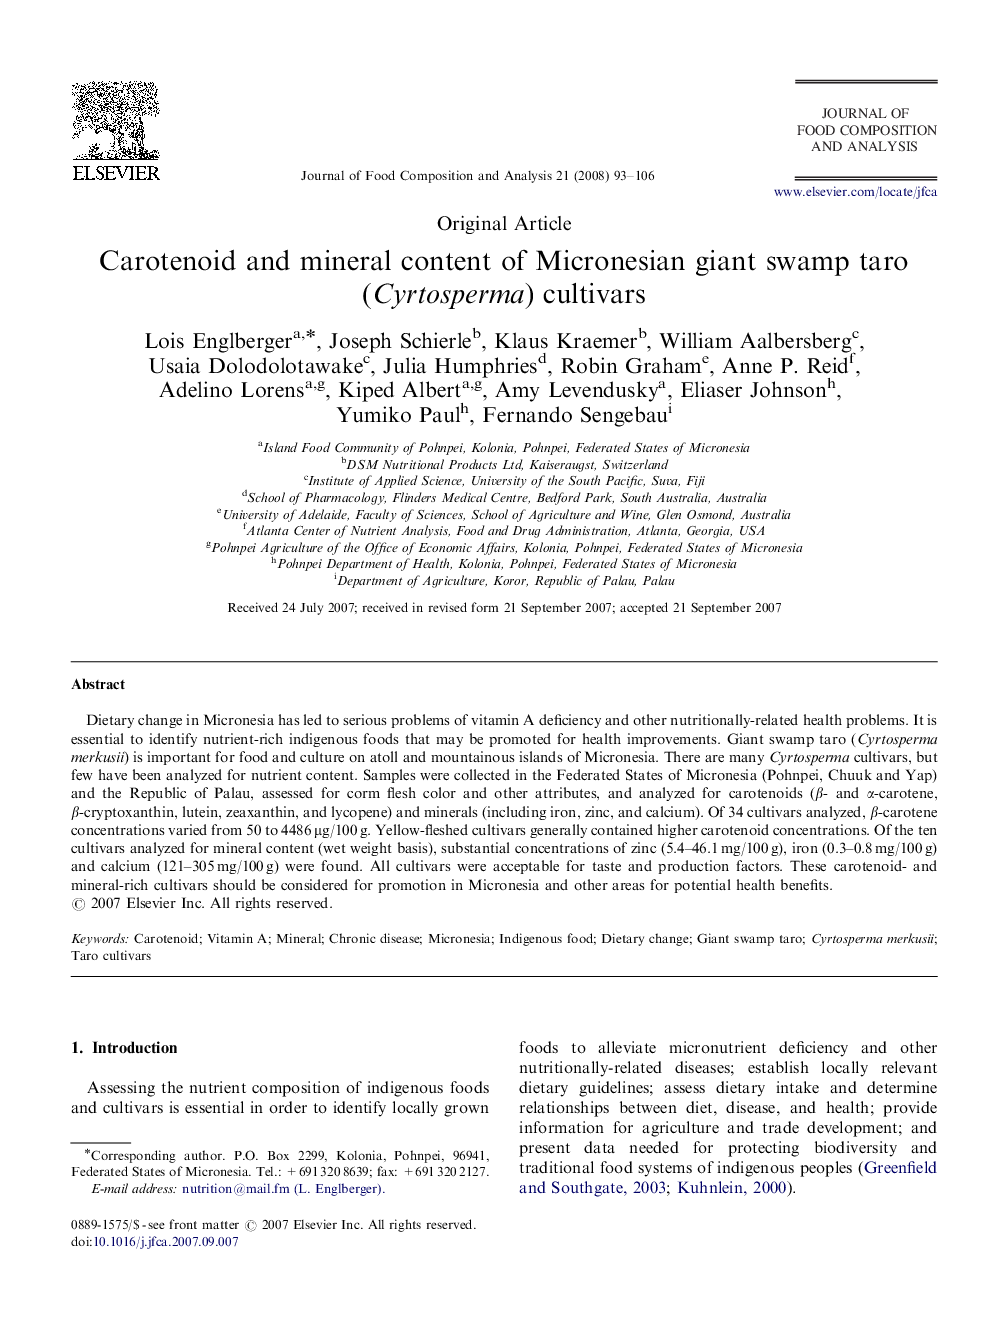 Carotenoid and mineral content of Micronesian giant swamp taro (Cyrtosperma) cultivars